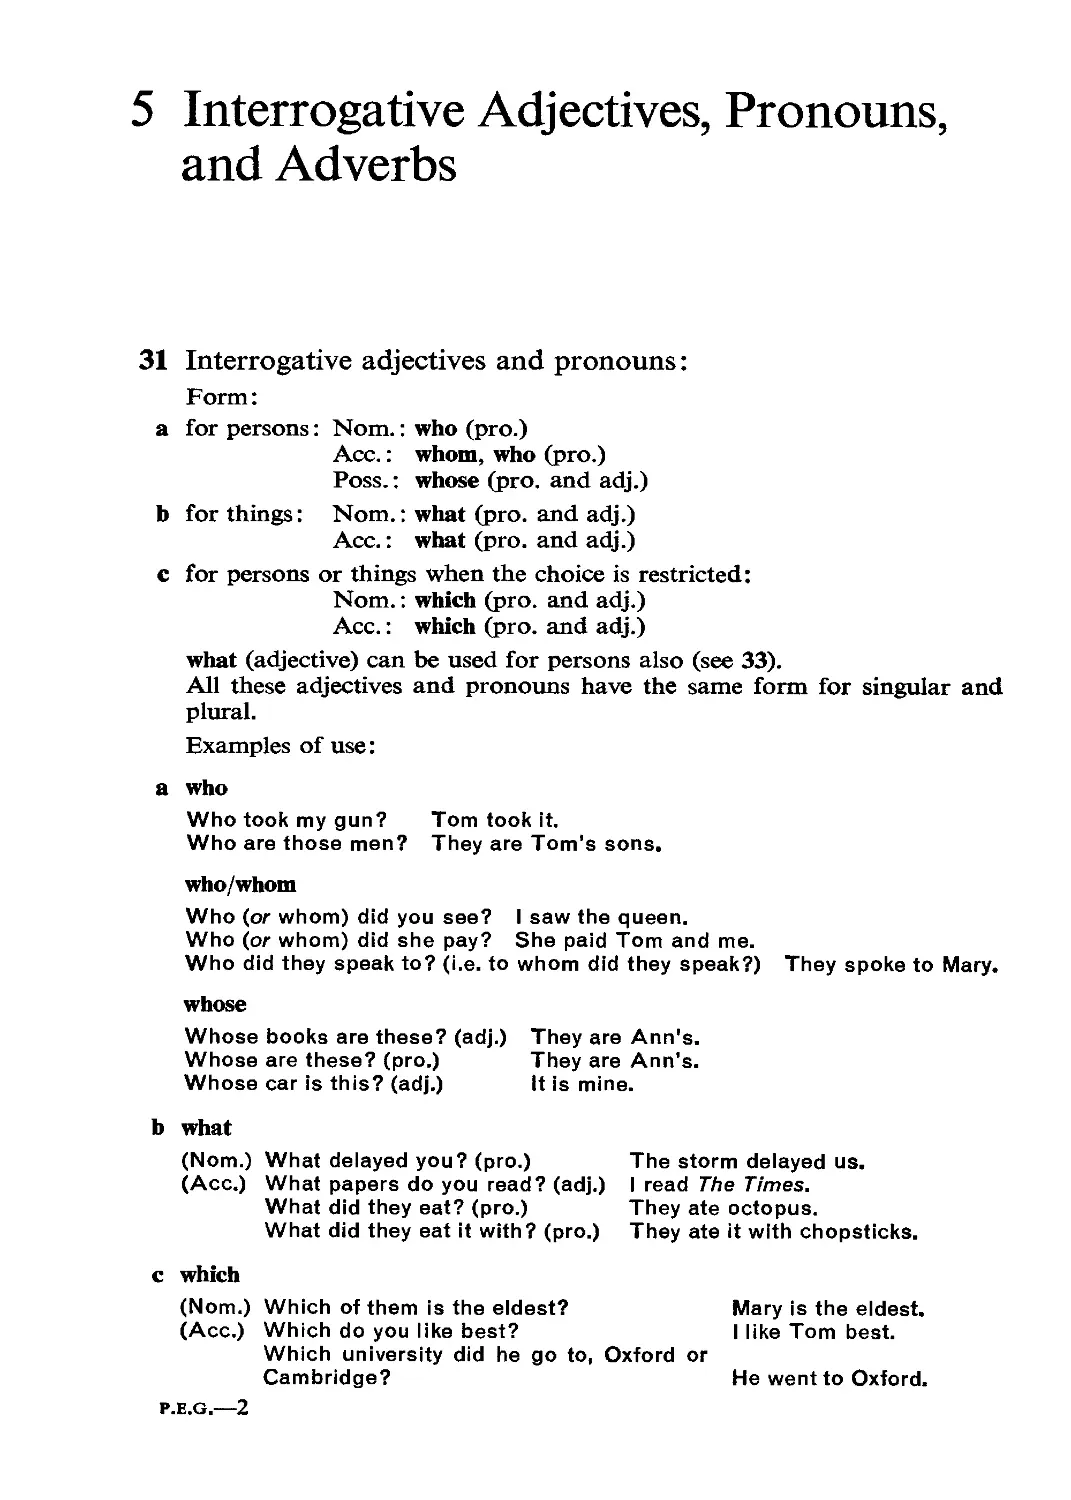 Interrogative Adjectives, Pronouns and Advers